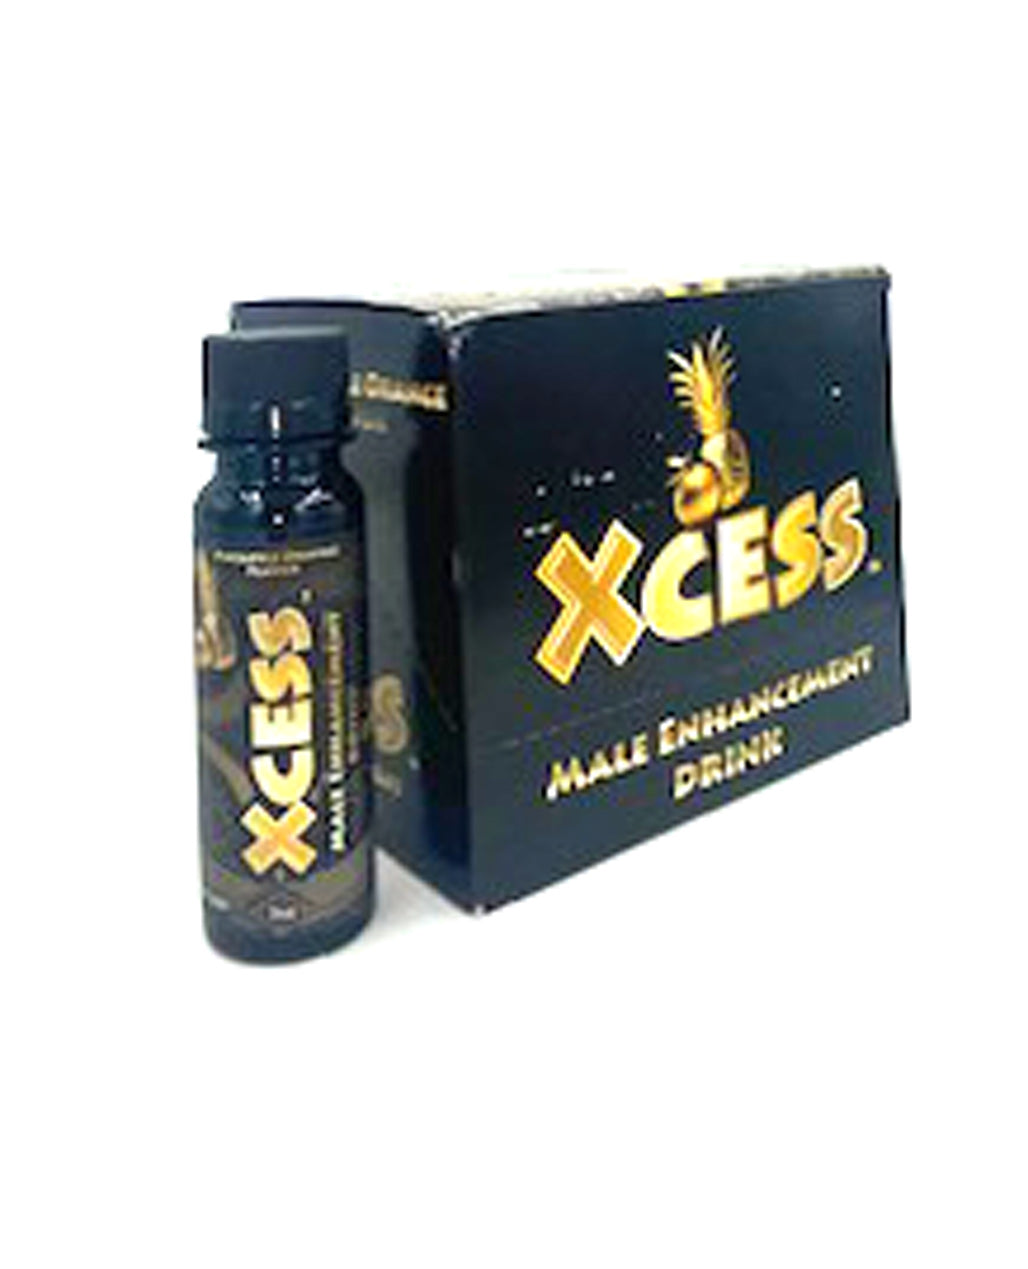 Xcess Energy Drink Male Enhancement 12 Ct Display  - Pineapple Orange